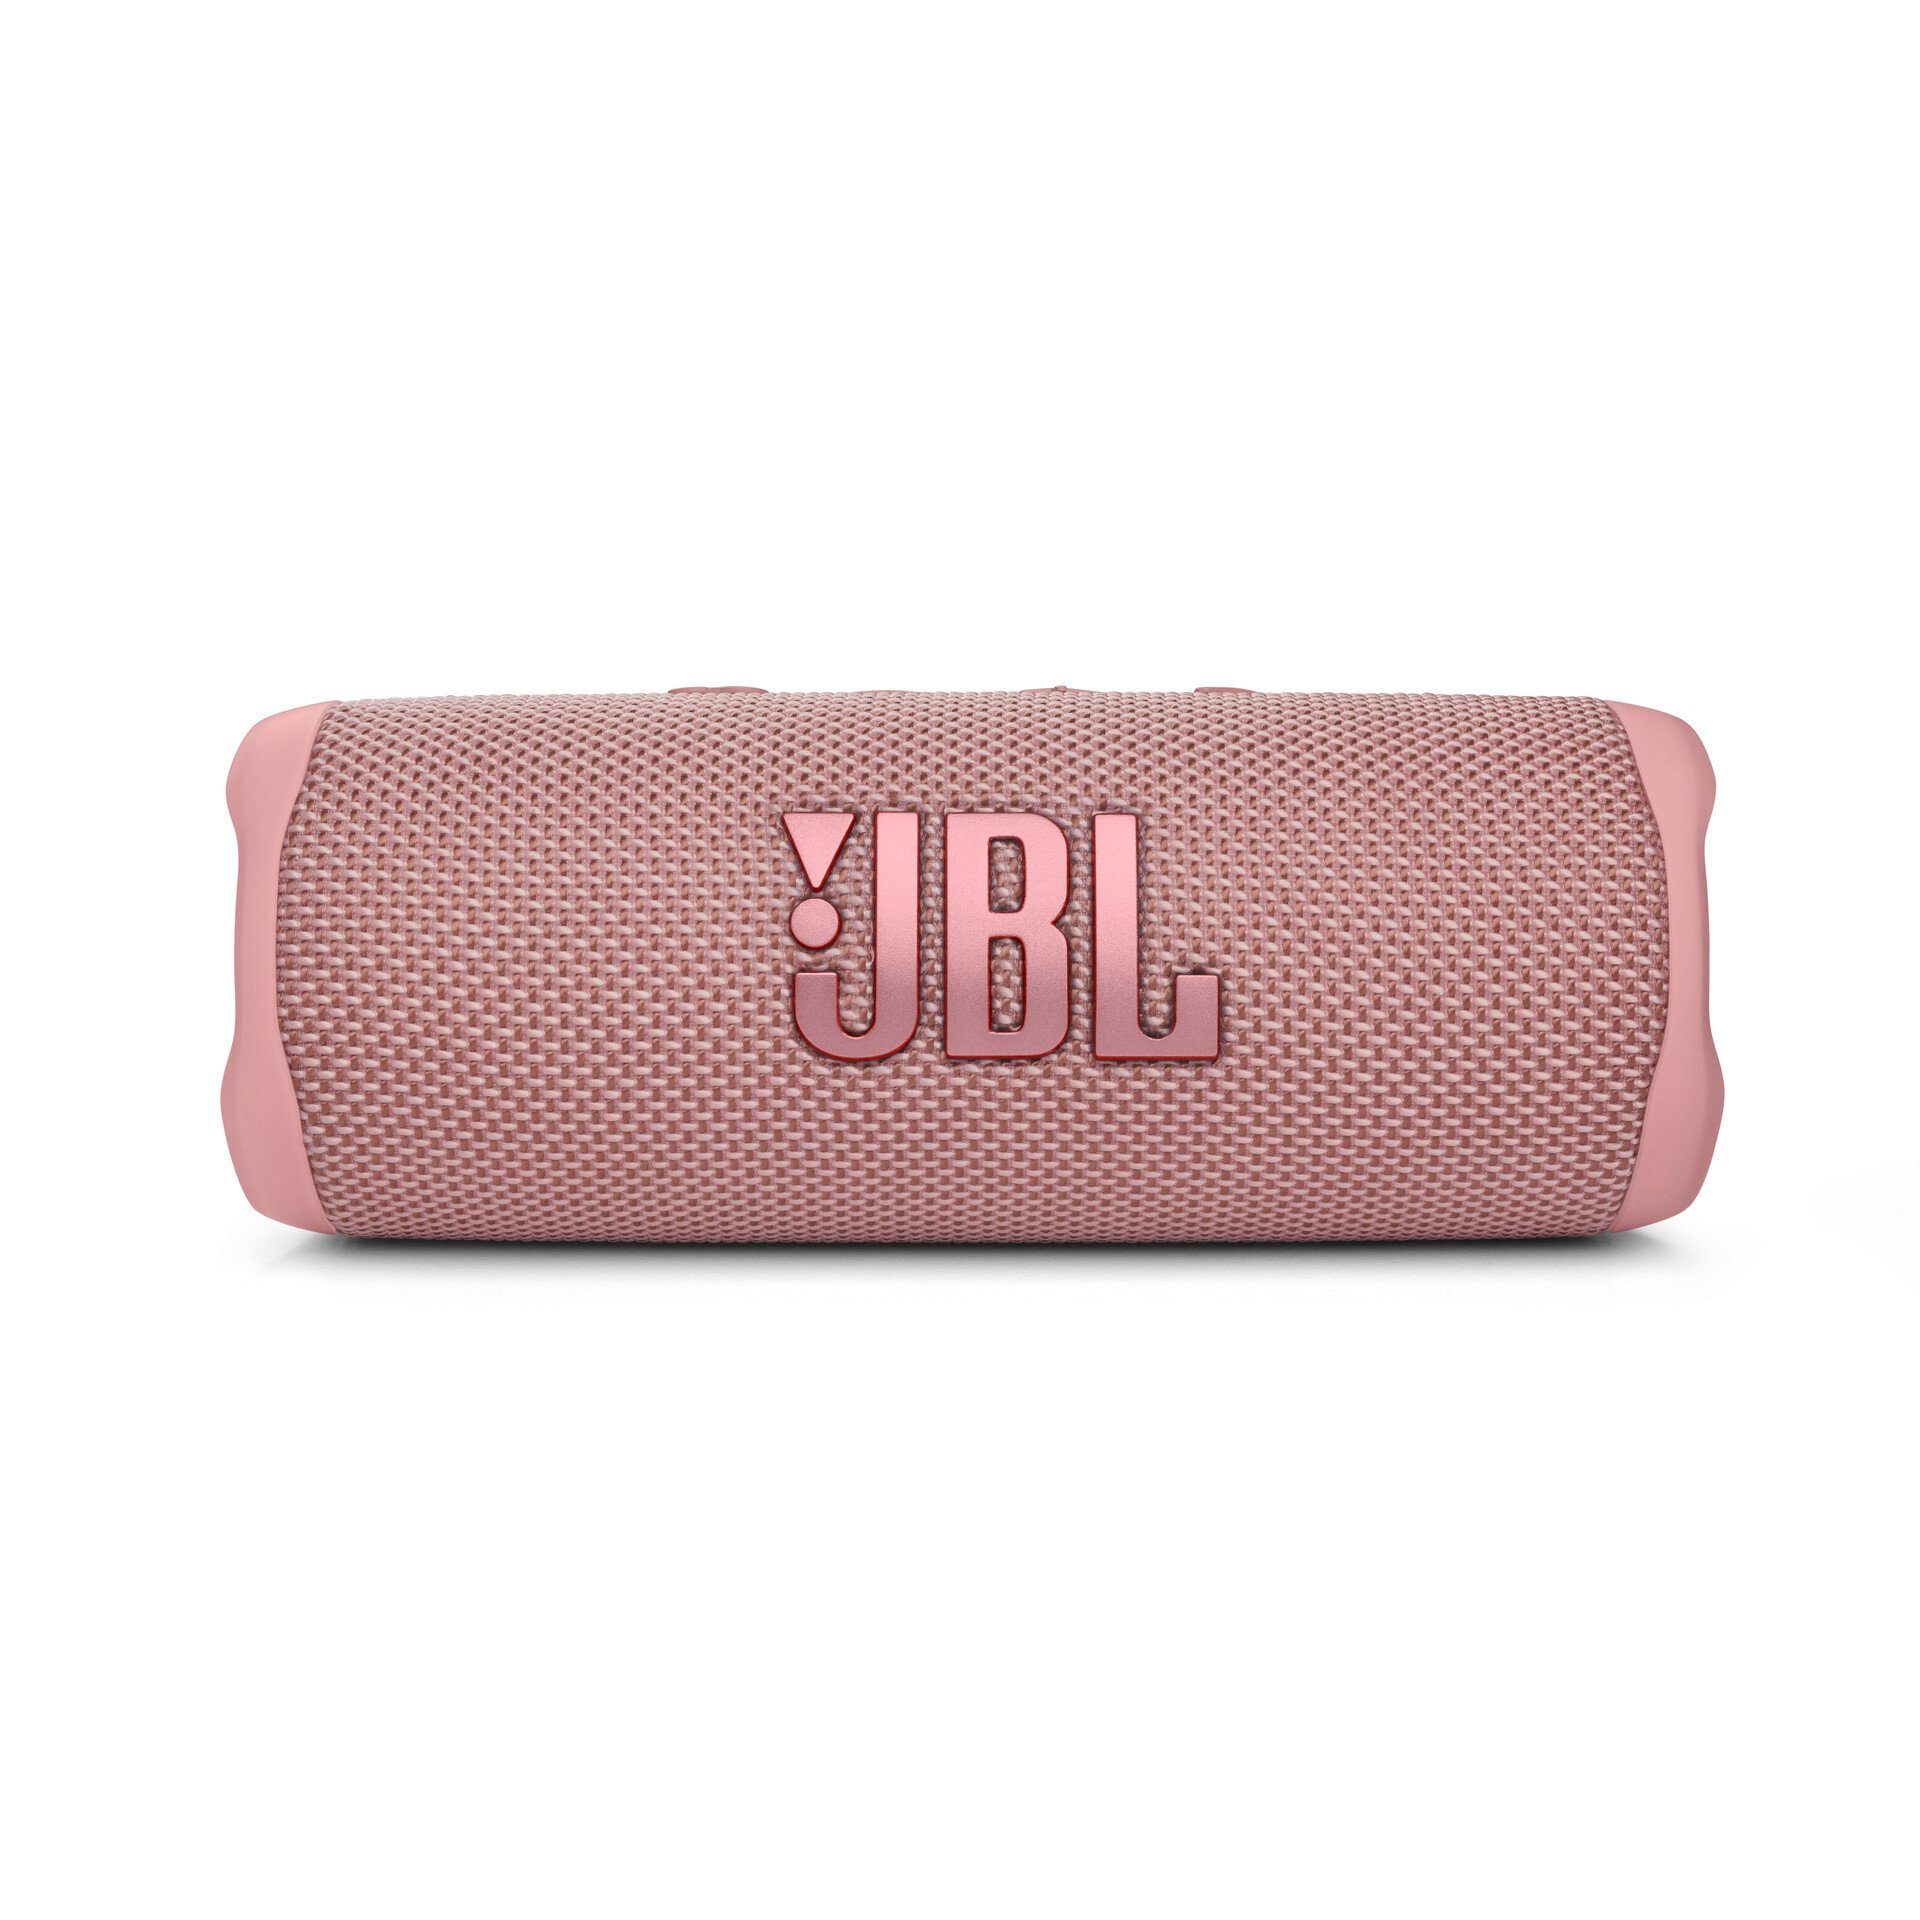 JBL FLIP 6 pink (Bluetooth, 30 W) Lautsprecher